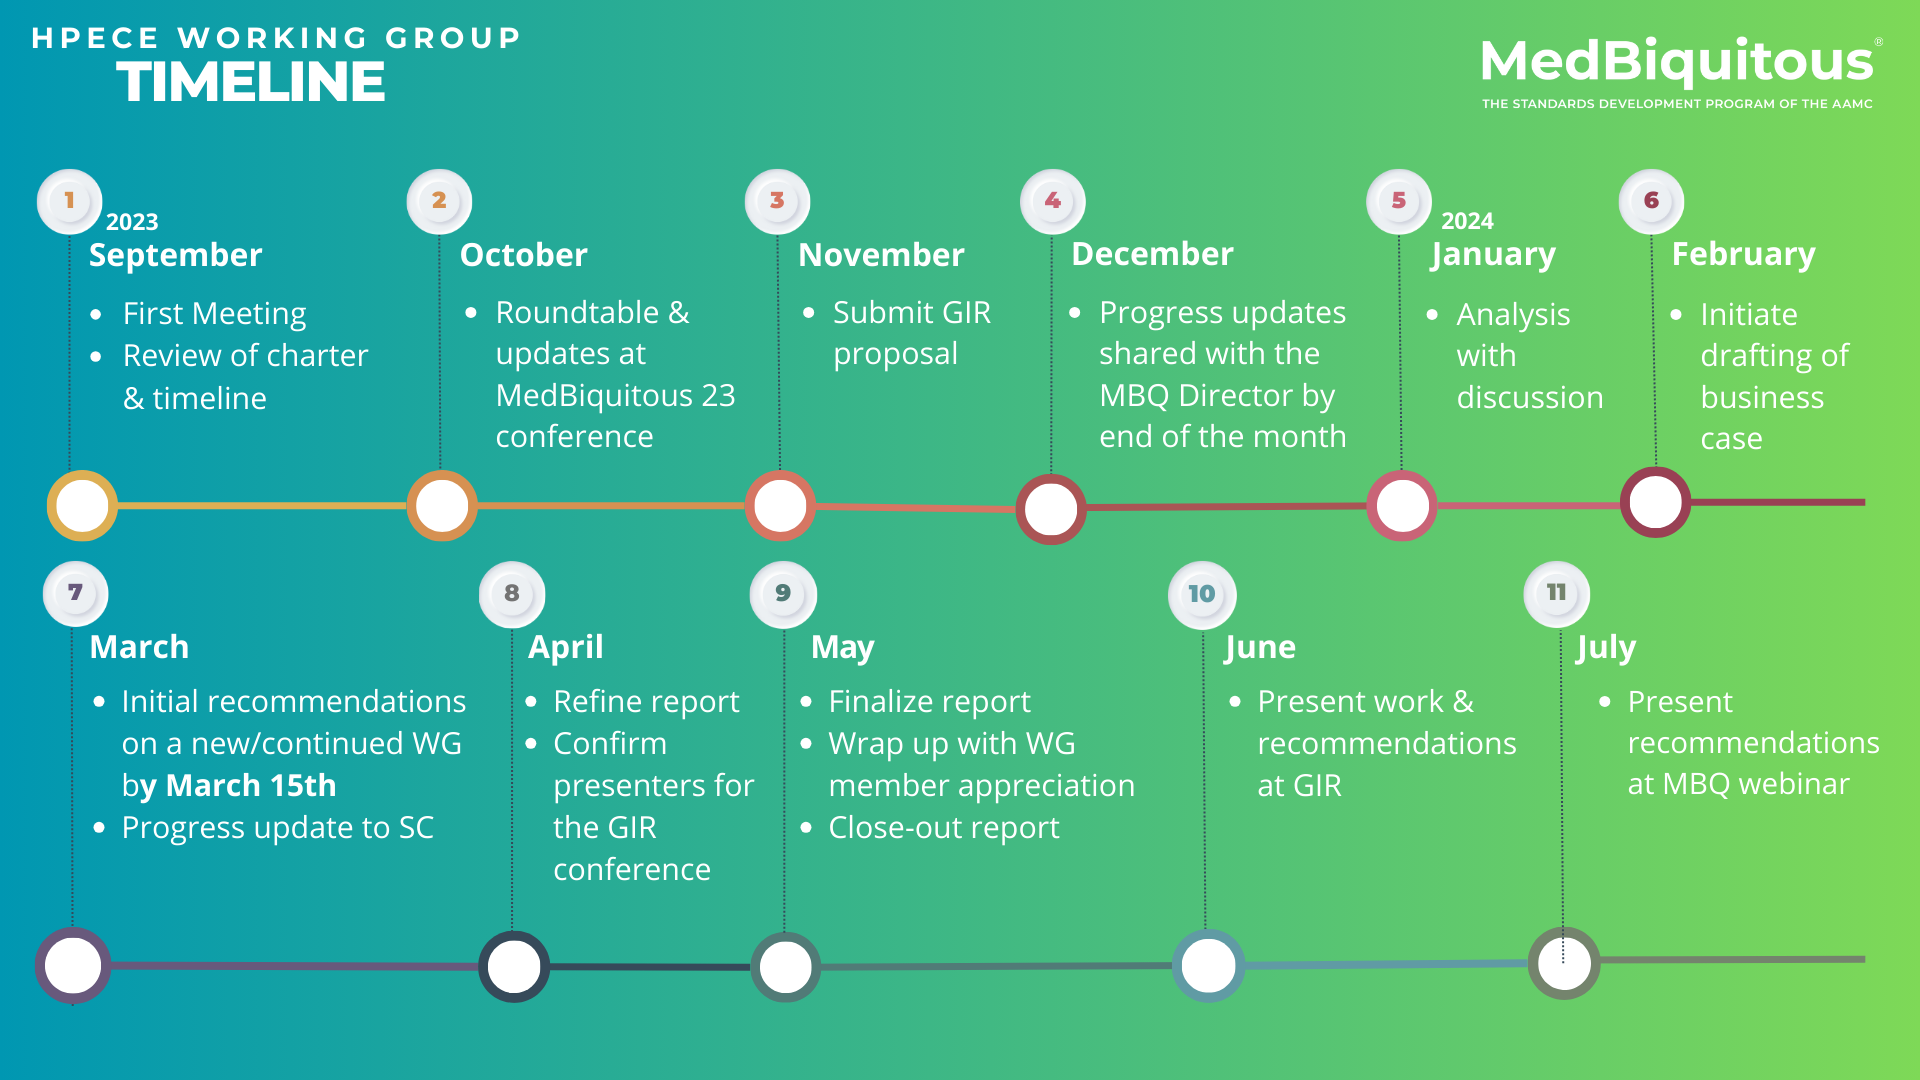 MedBiquitous HPECE Working Group Timeline